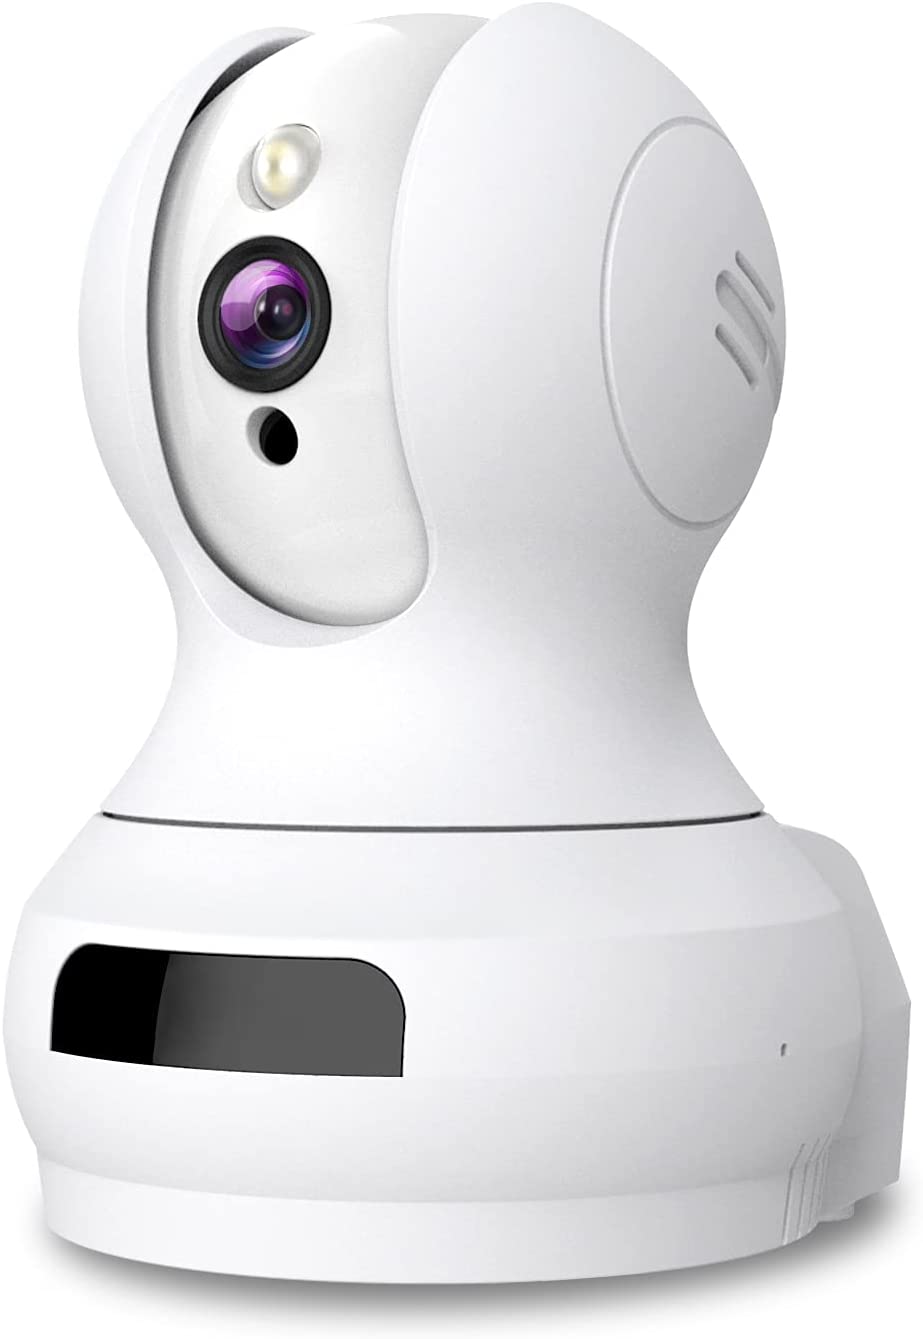 COOAU】ネットワークカメラ ペットカメラ IP防犯監視カメラ 半額商品